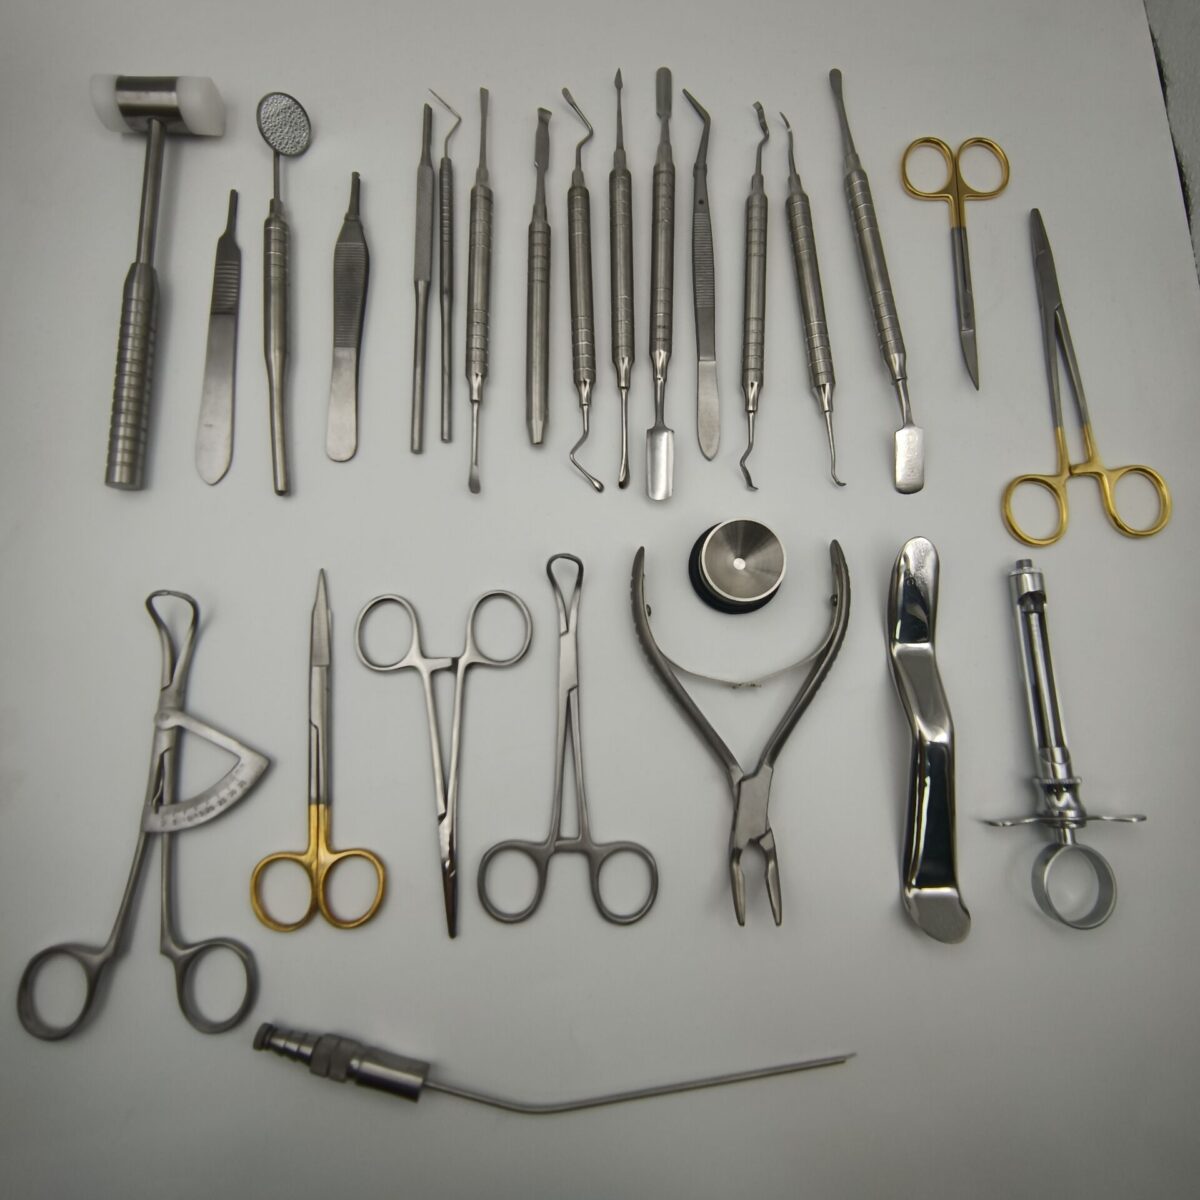 implant surgery instrument kit